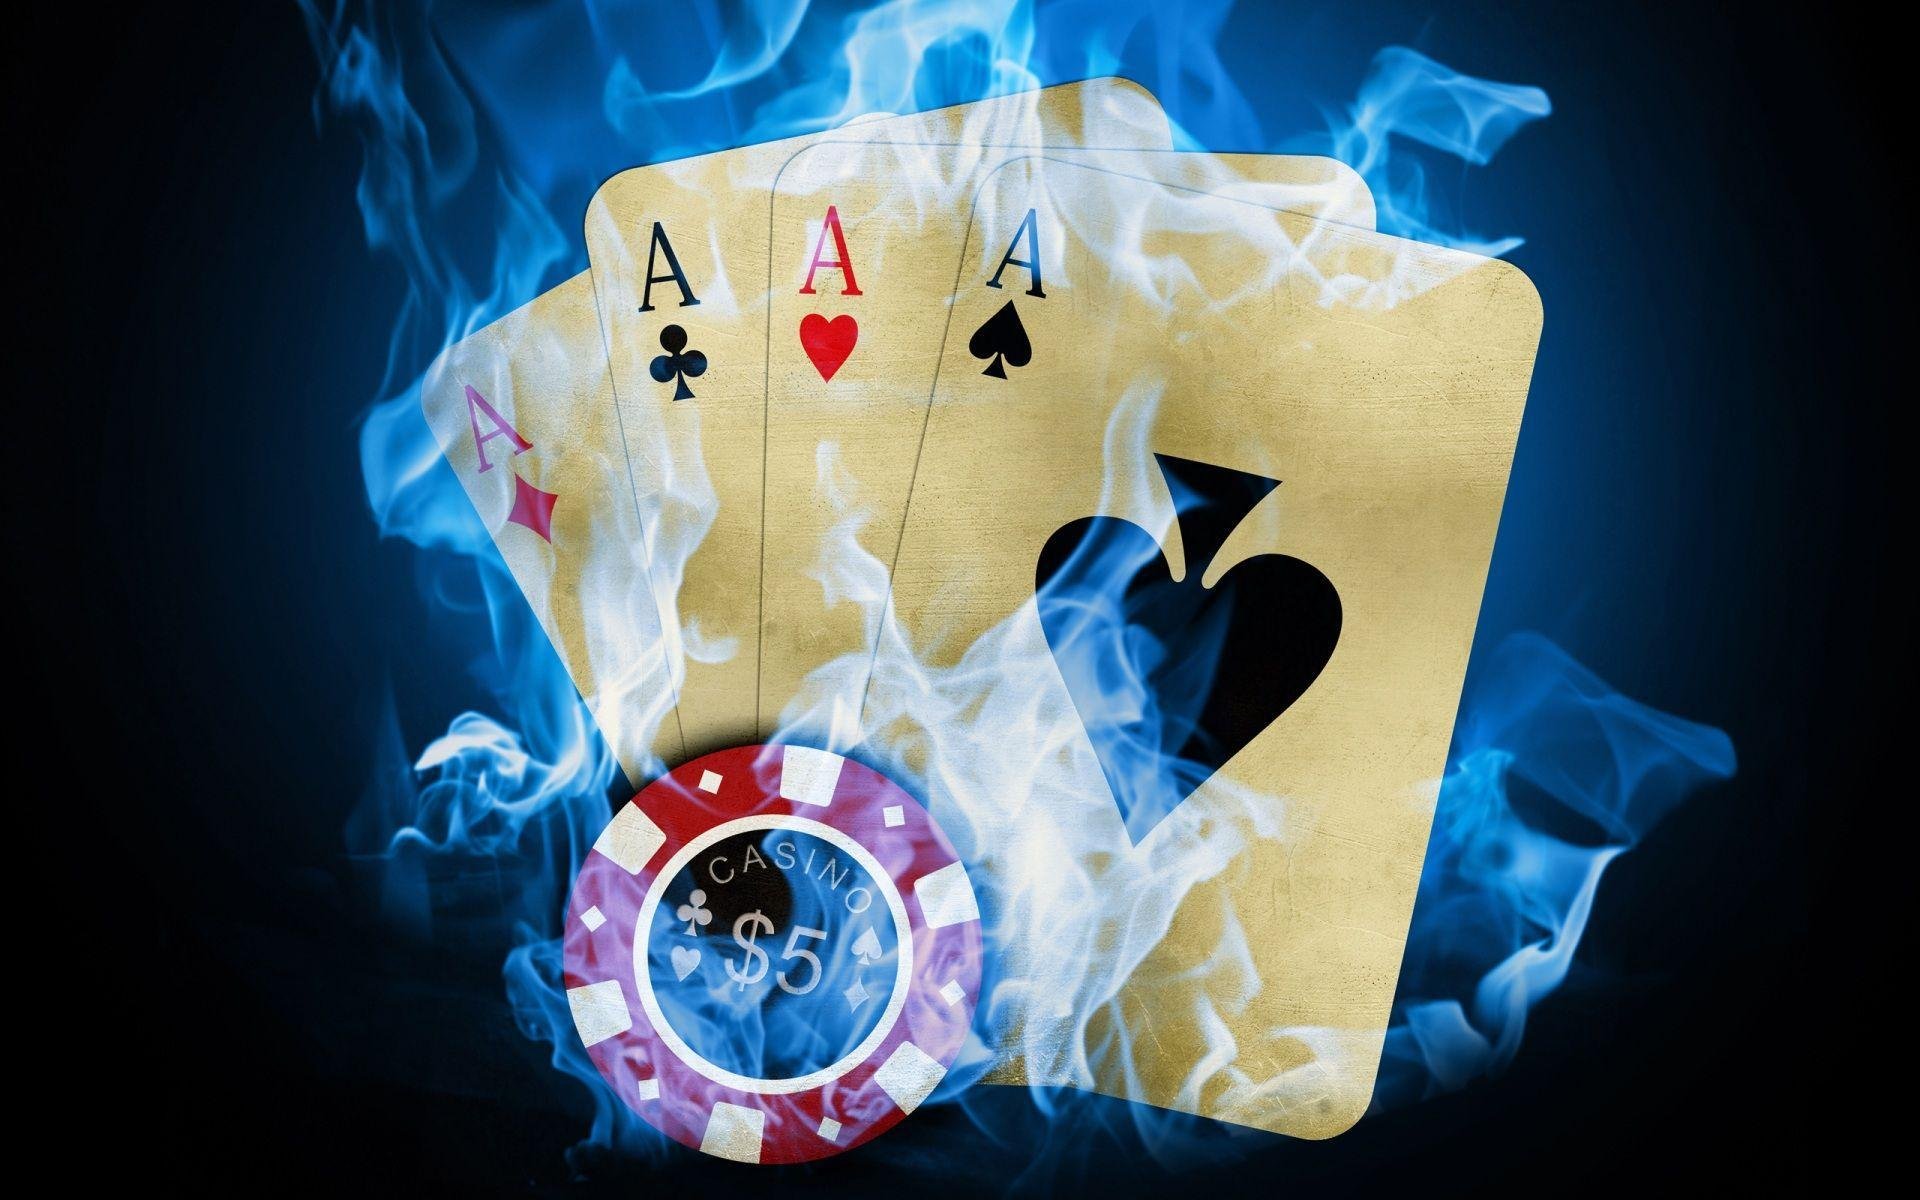 Rimbapoker is The Best PokerQq Site